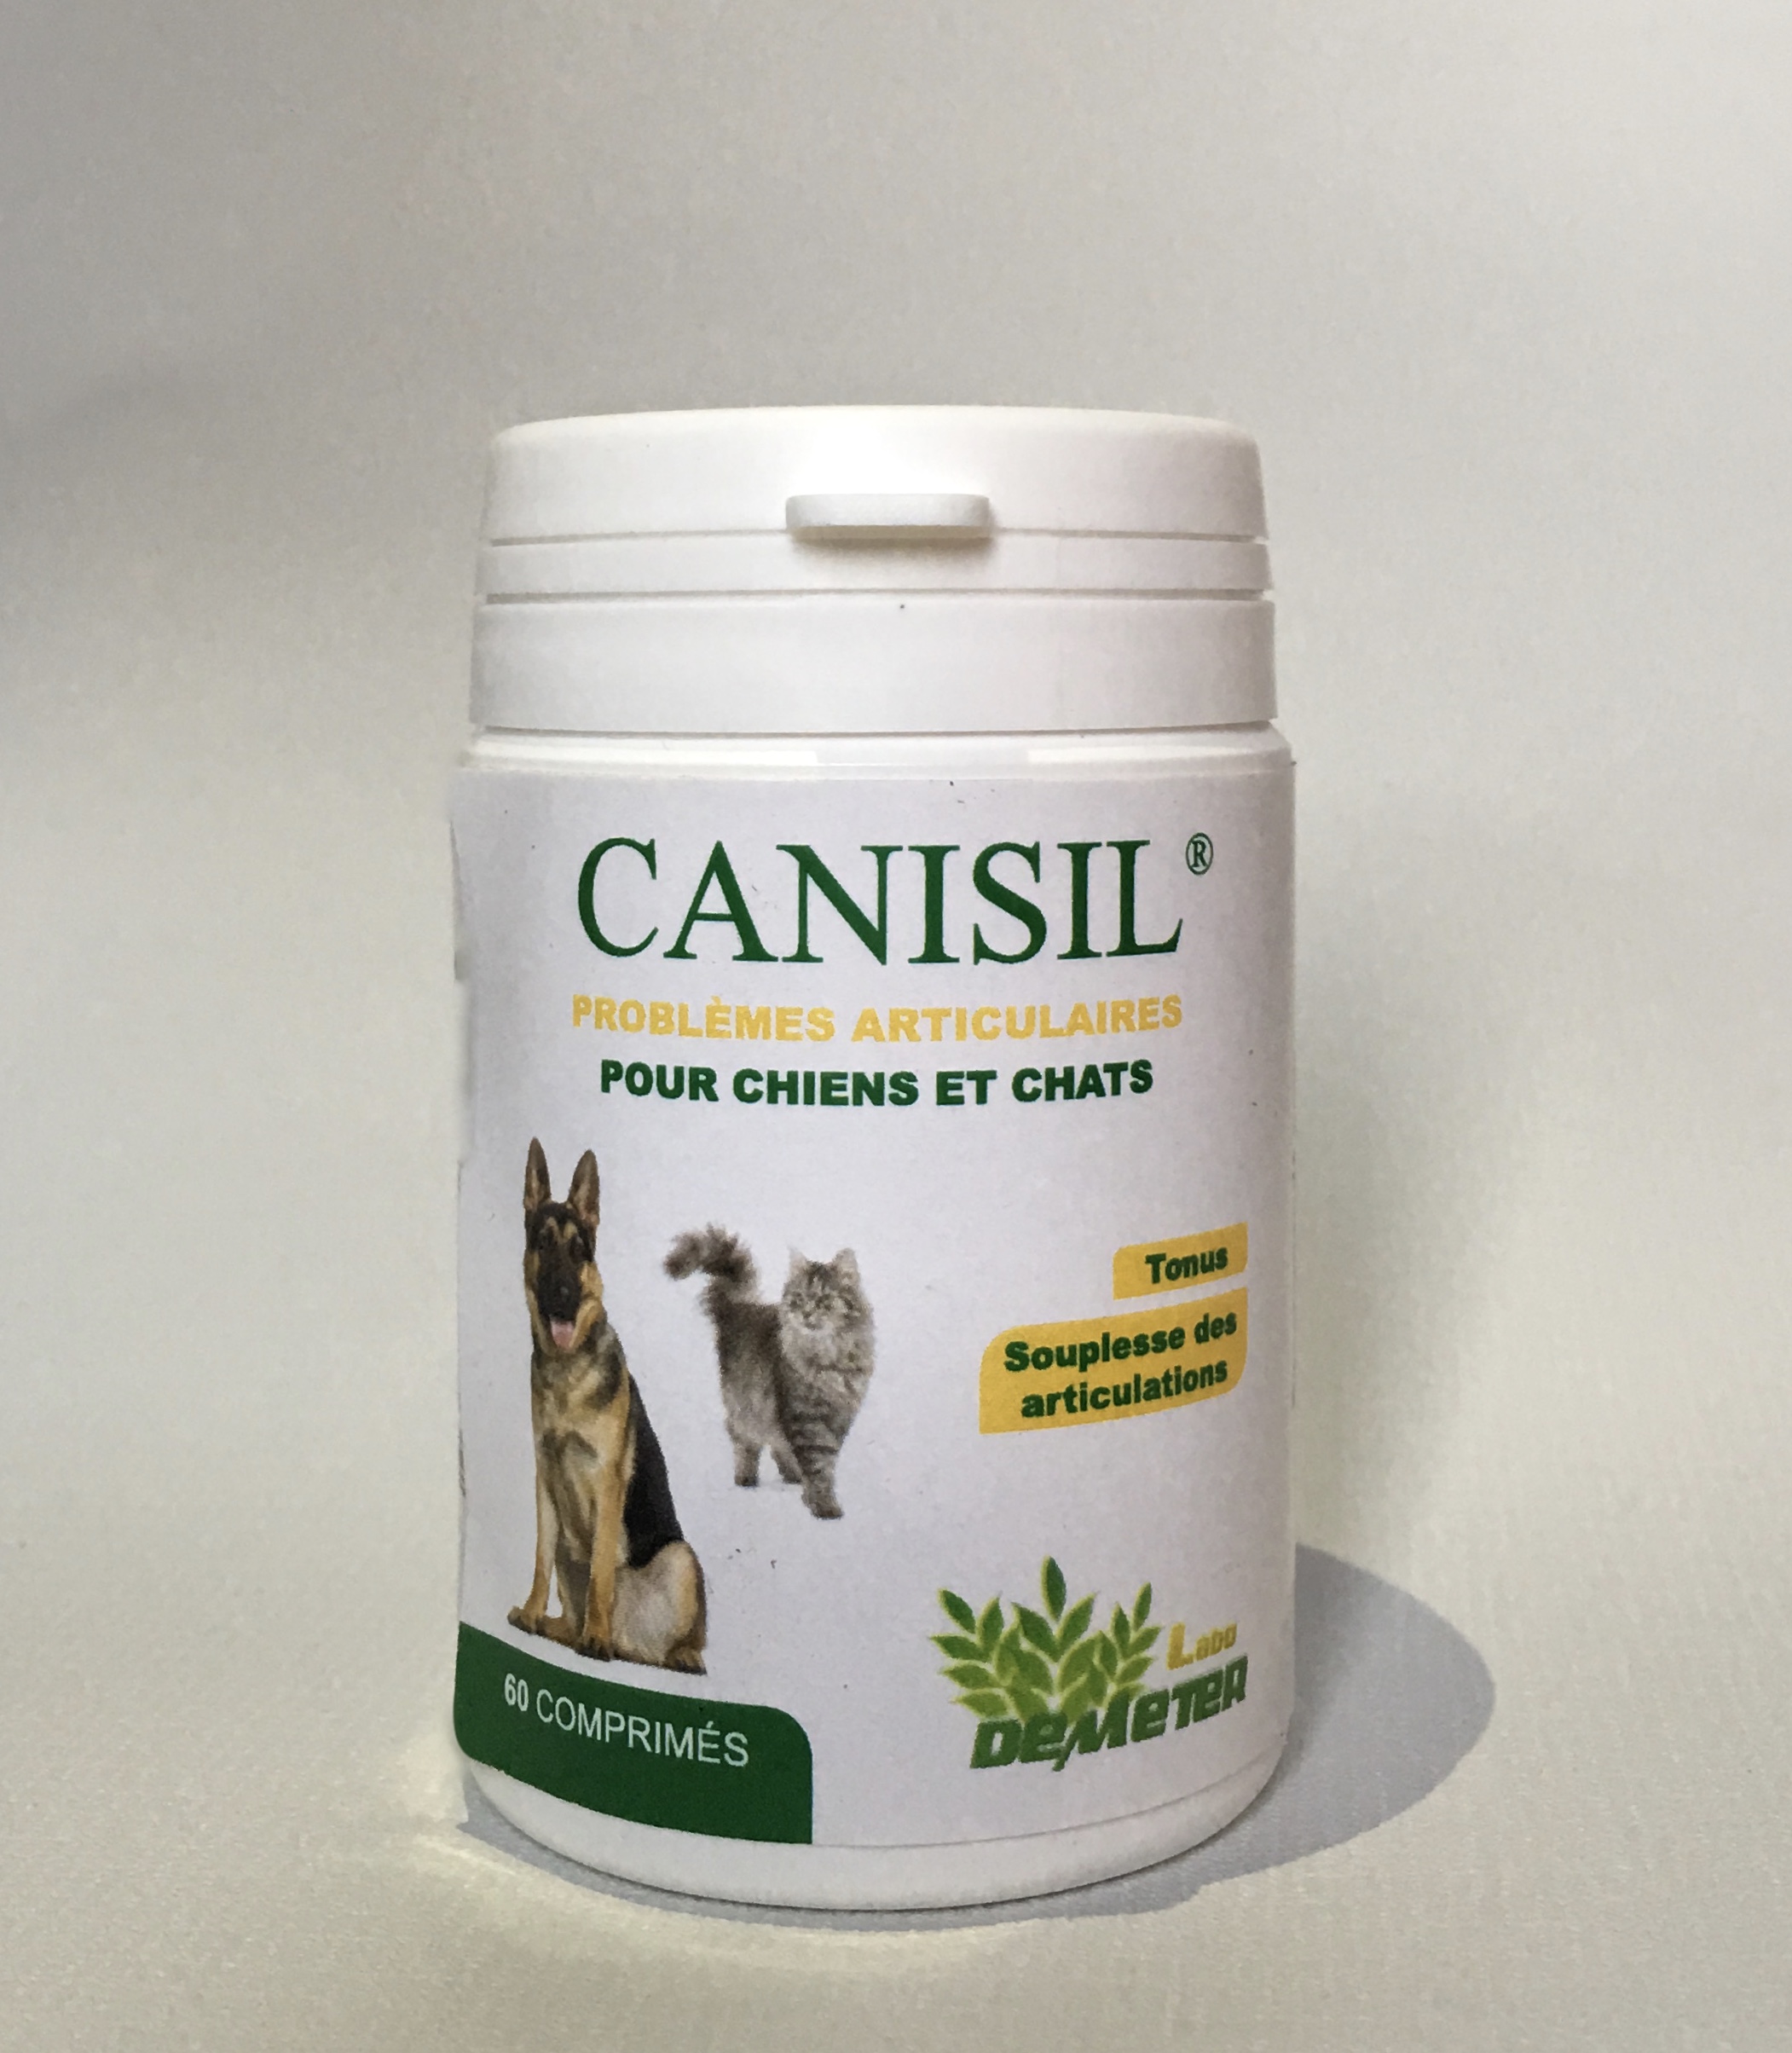 Canisil produit naturel arthrose vieux chat